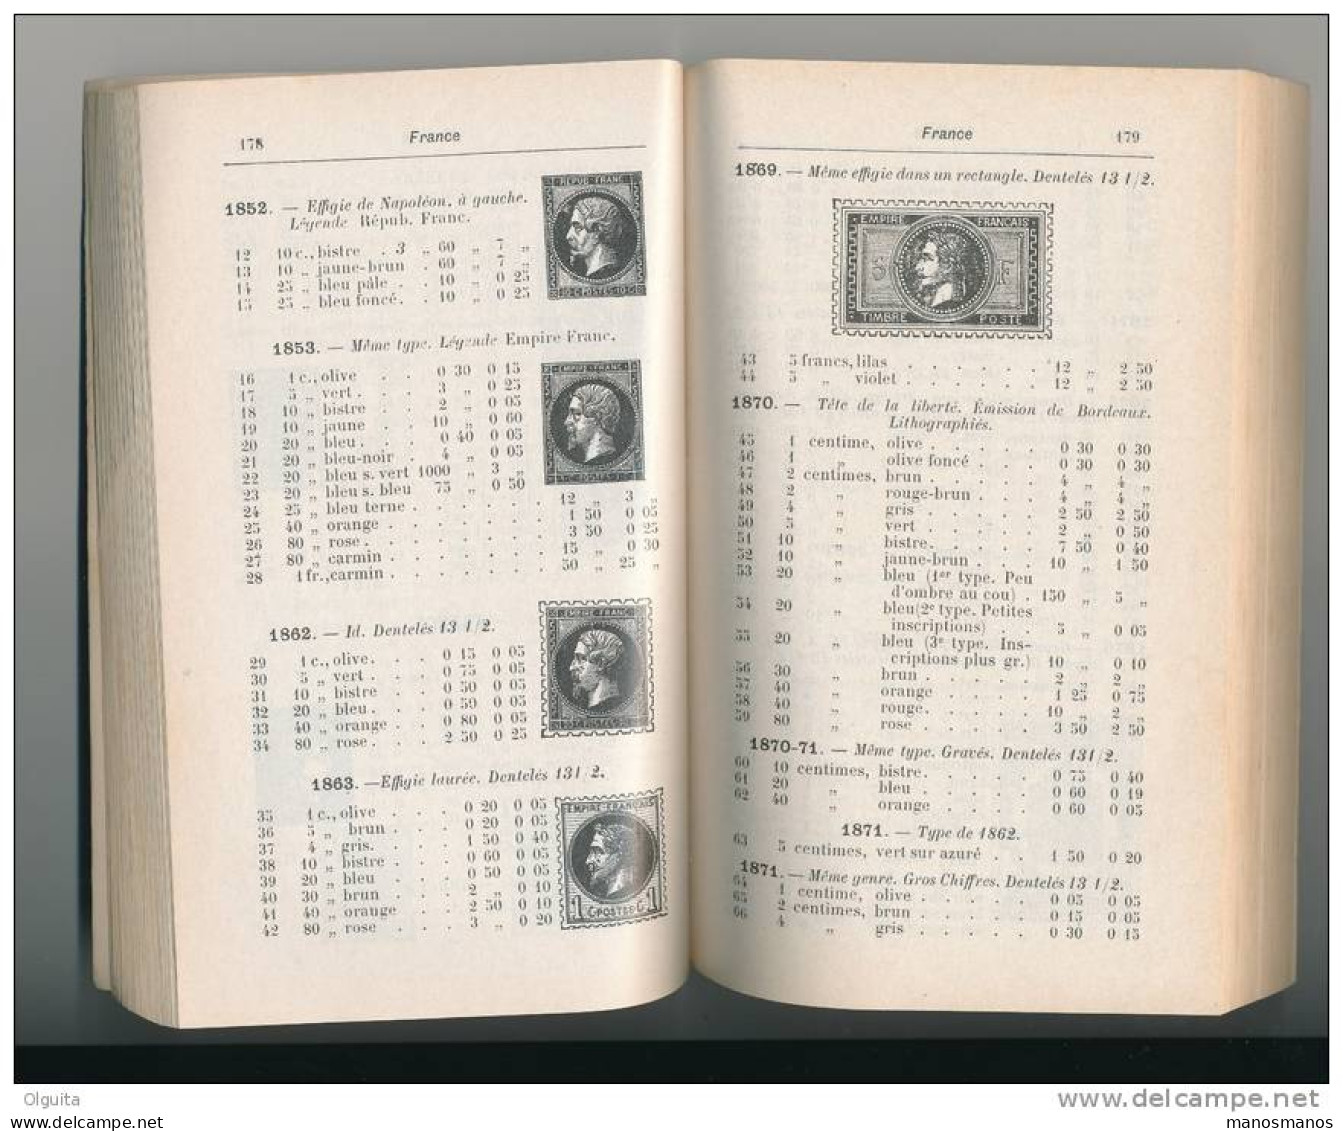 COLLECTOR ITEM - Catalogue Yvert § Tellier 1897 , Prix 2 Francs ,552 P, Très Bel Etat  --  15/143 - France